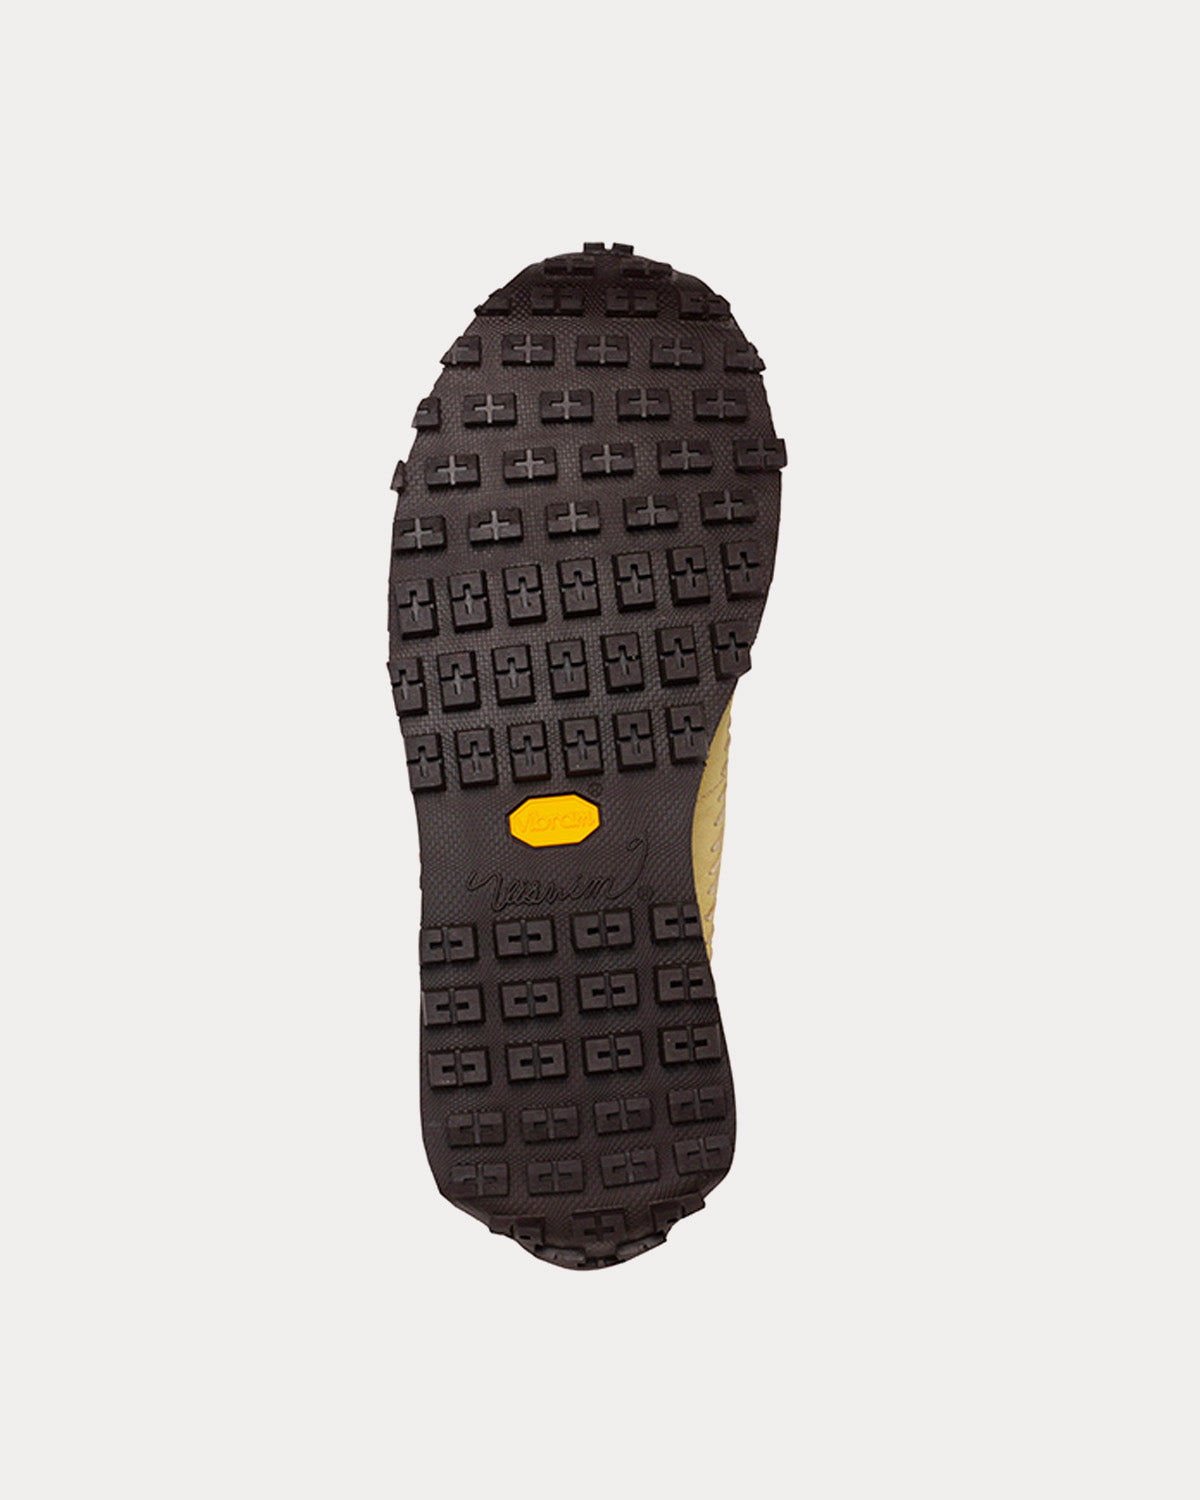 Visvim - Walpi Runner Yellow Low Top Sneakers